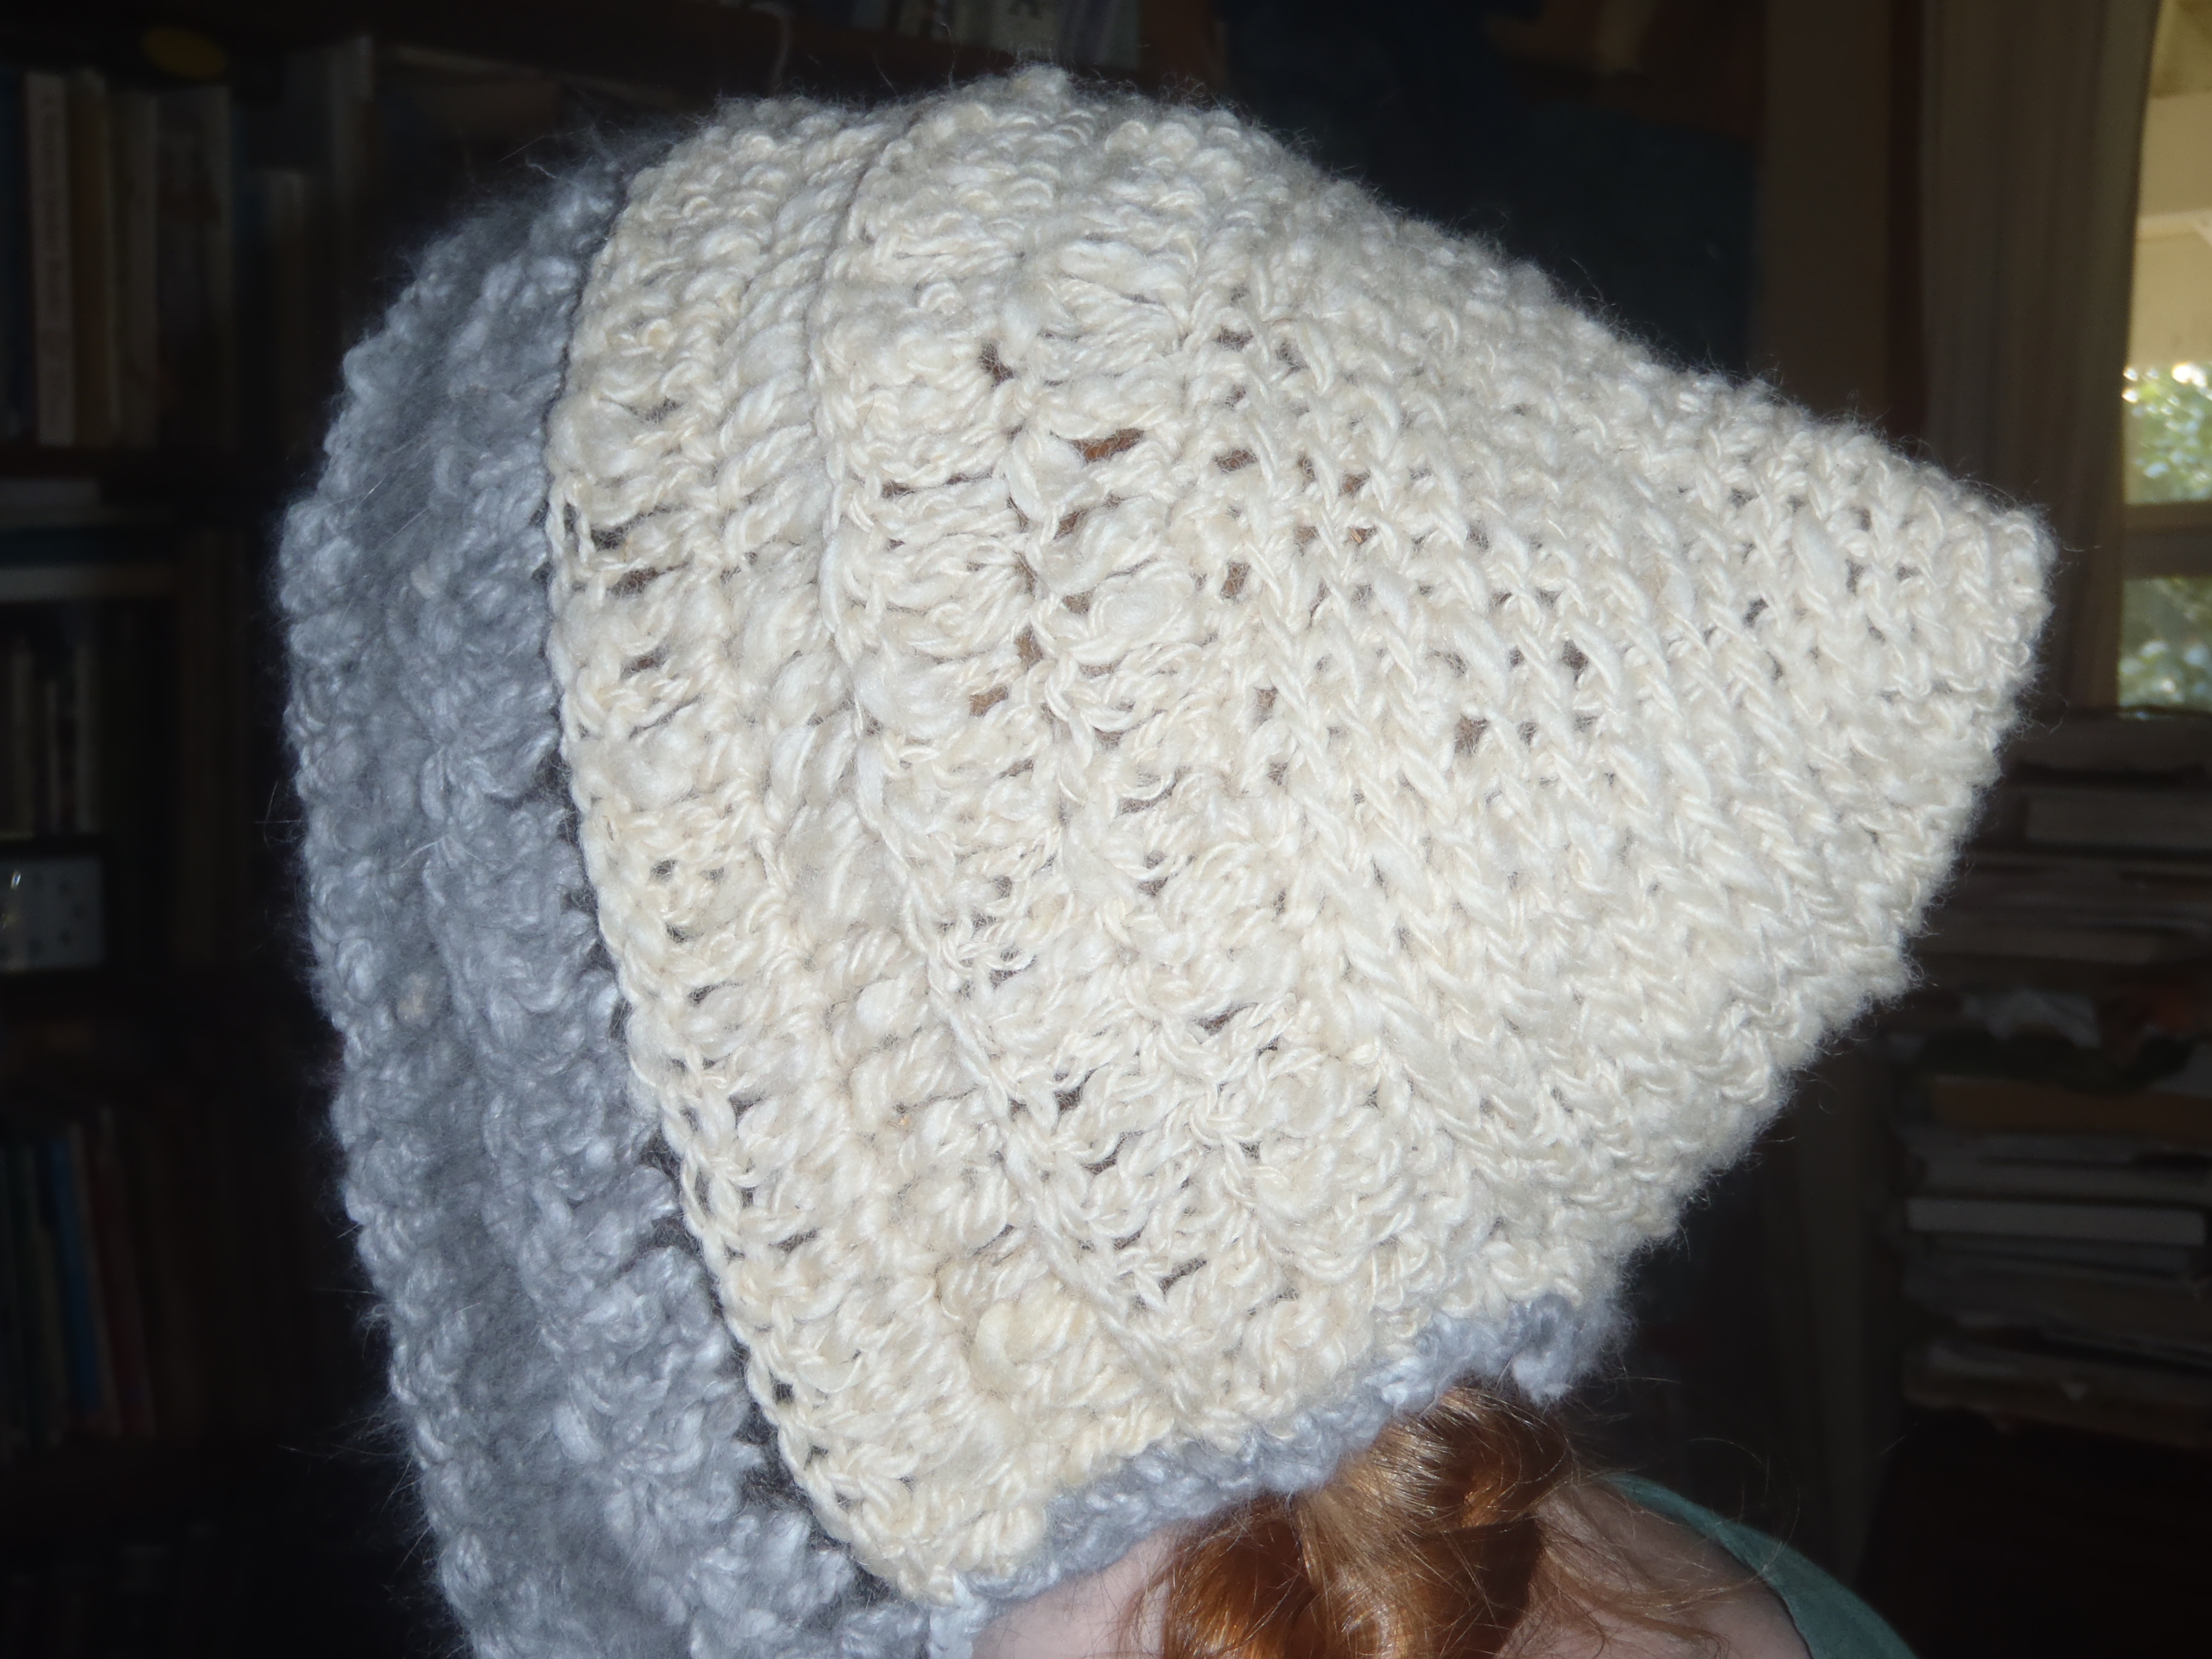 Hand crocheted sheep wool hat with angora trim.